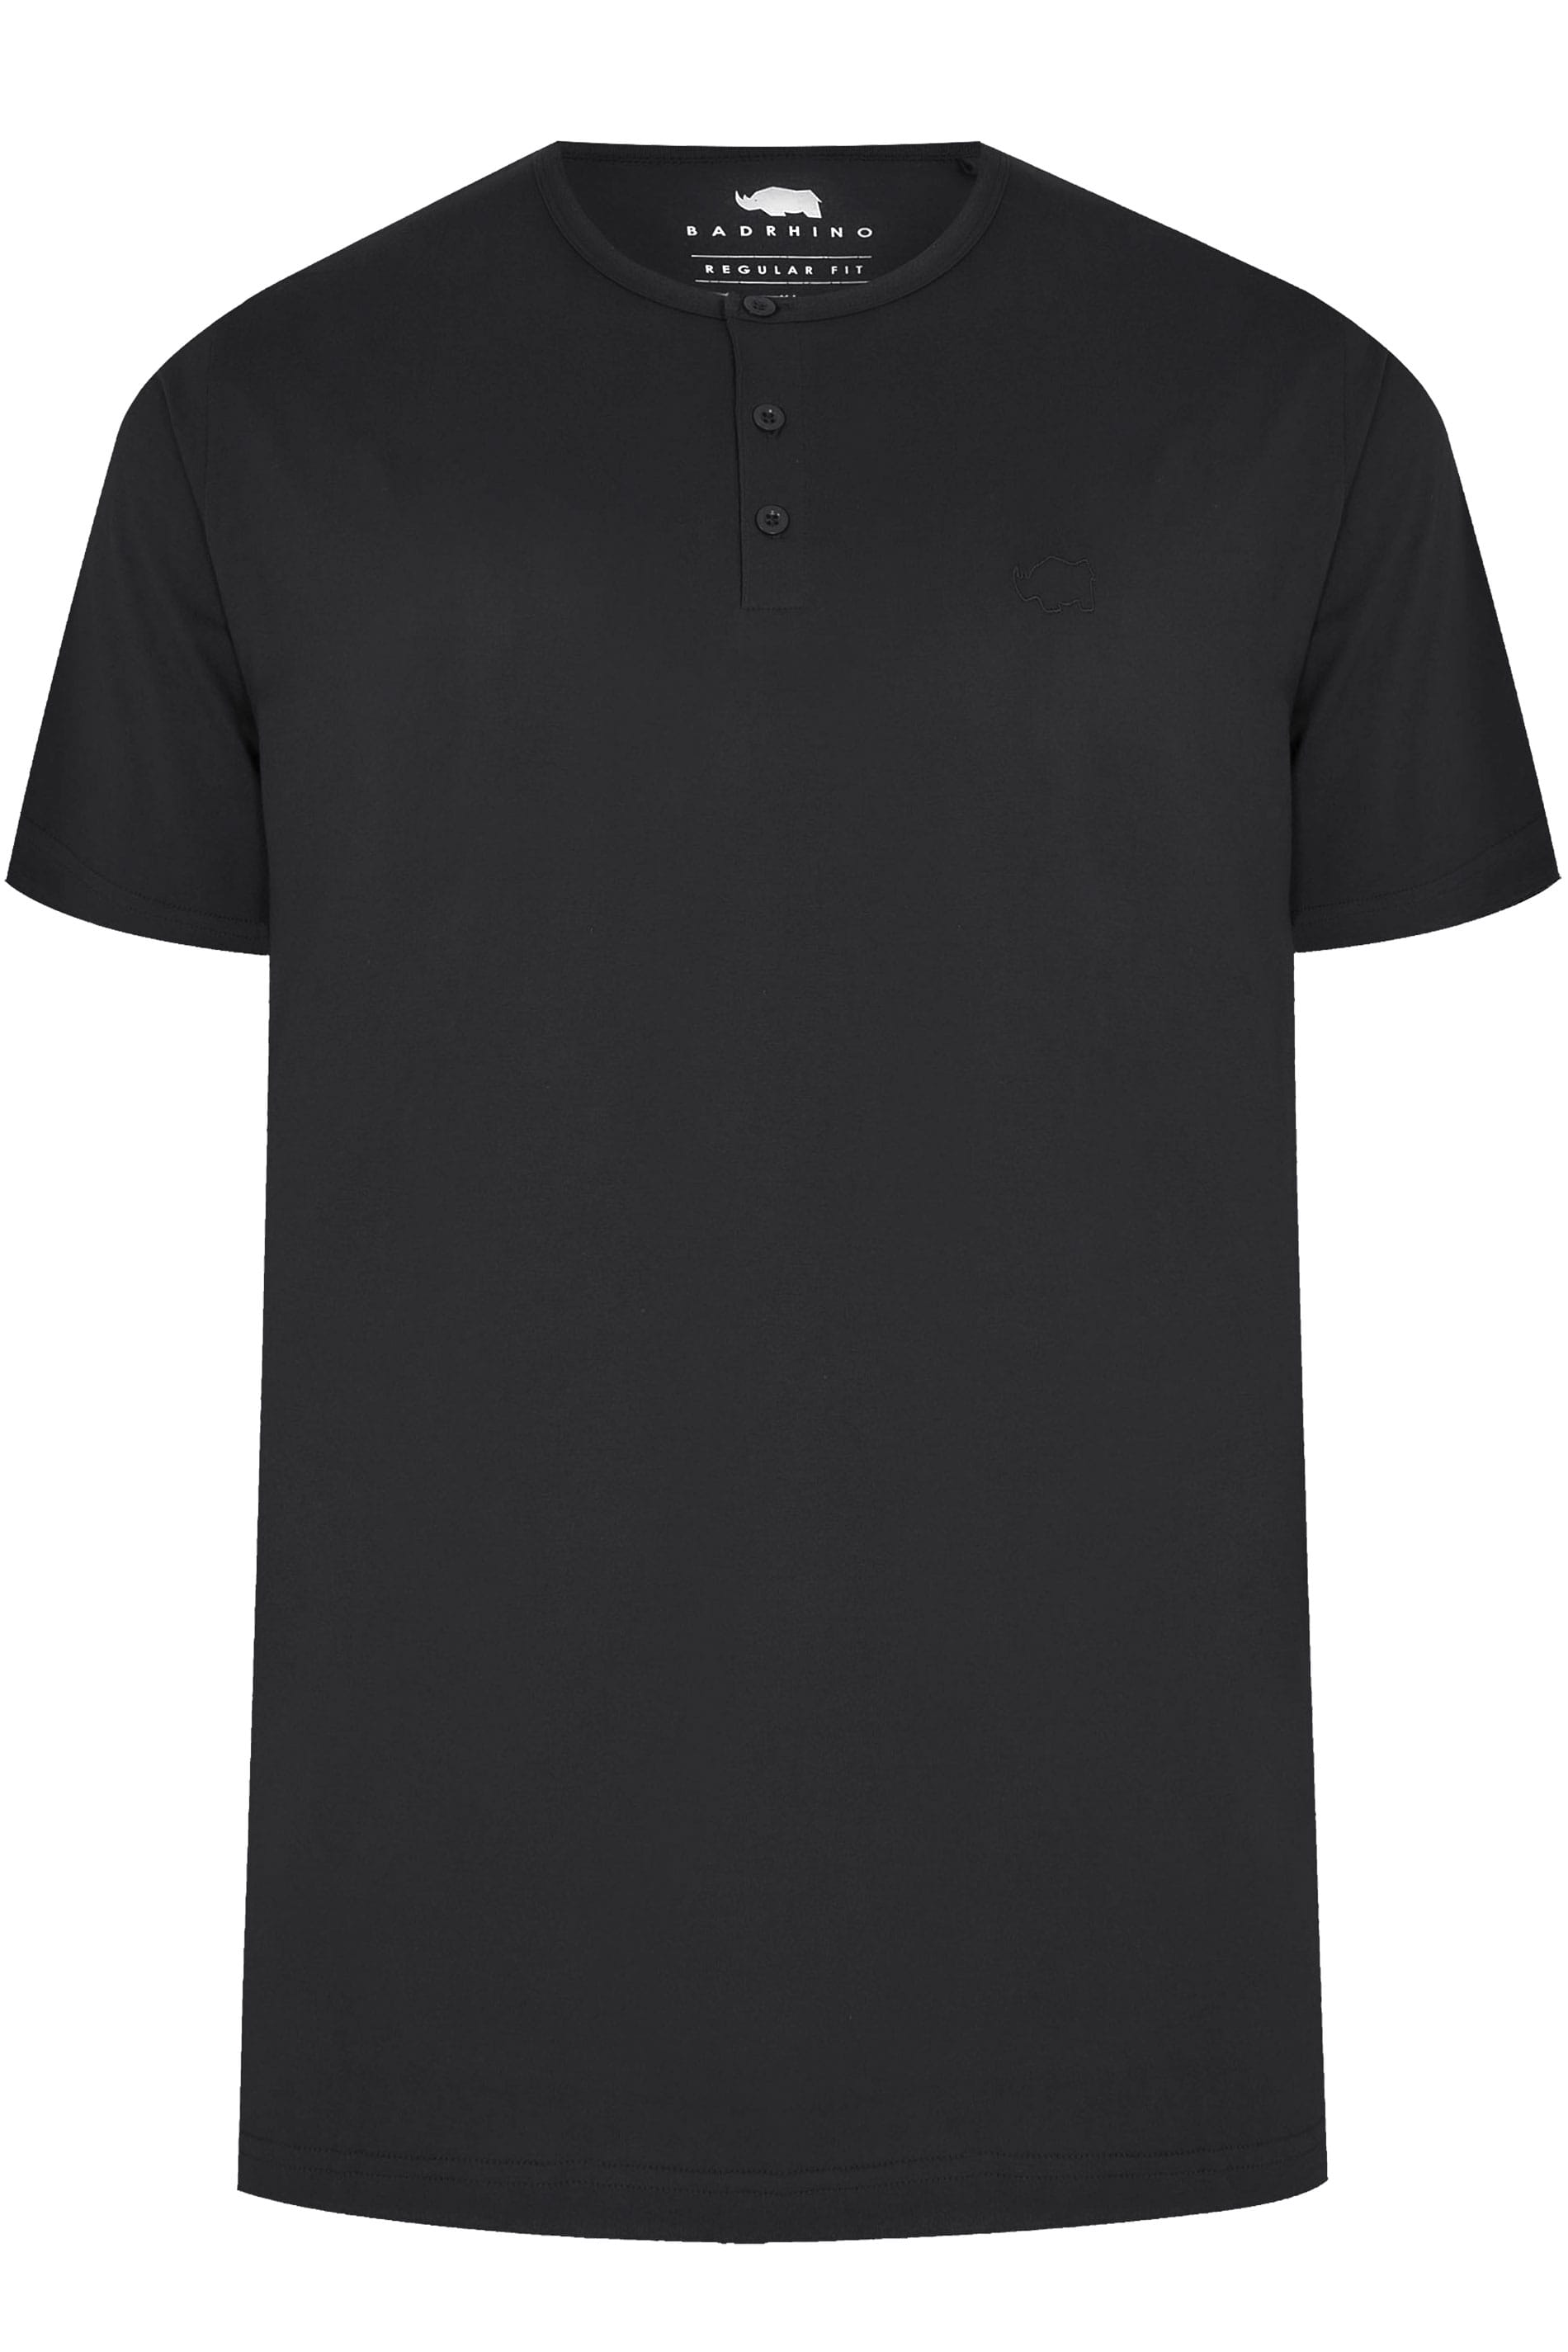 BadRhino Black Short Sleeve Grandad T-Shirt sizes L to 8XL